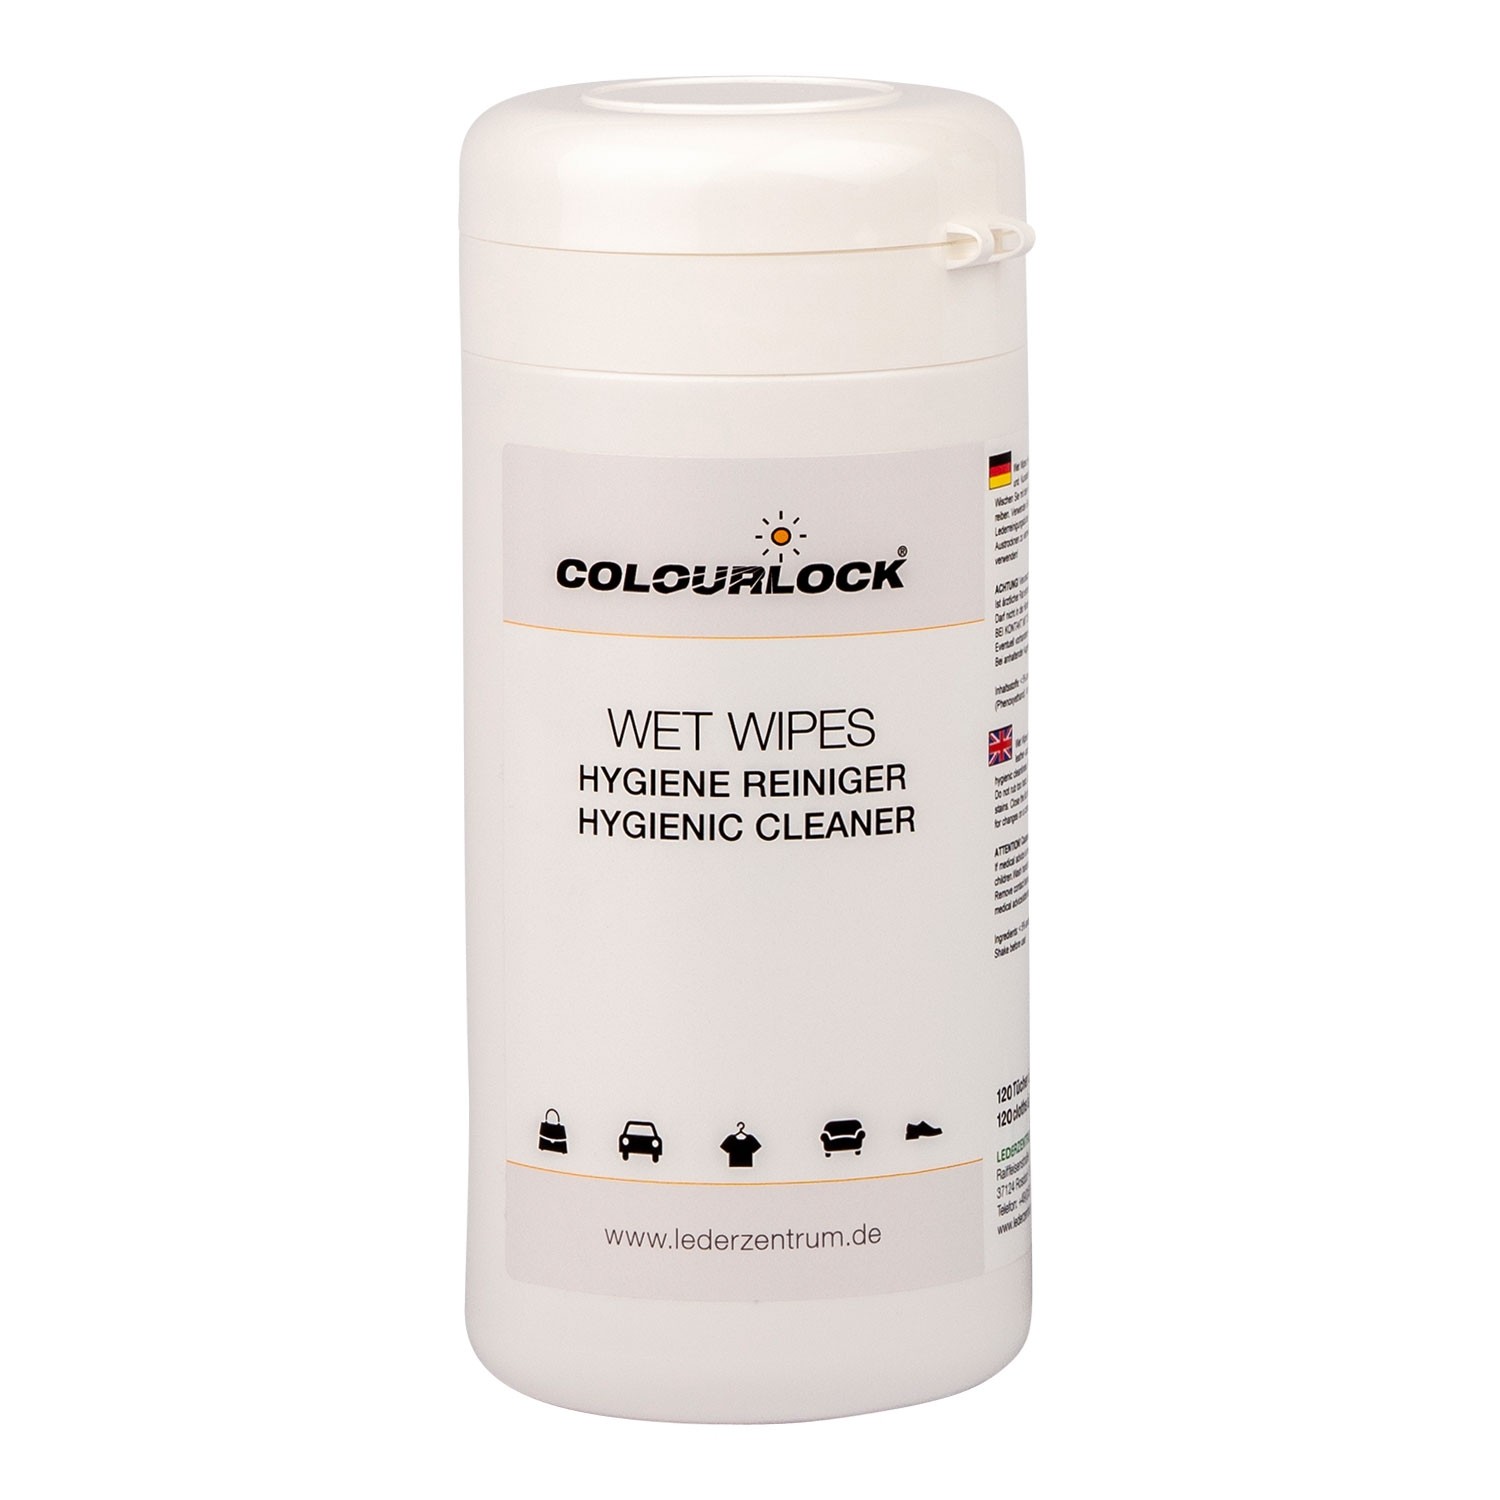 COLOURLOCK Wet Wipes Hygiene Reiniger, 90 stuks